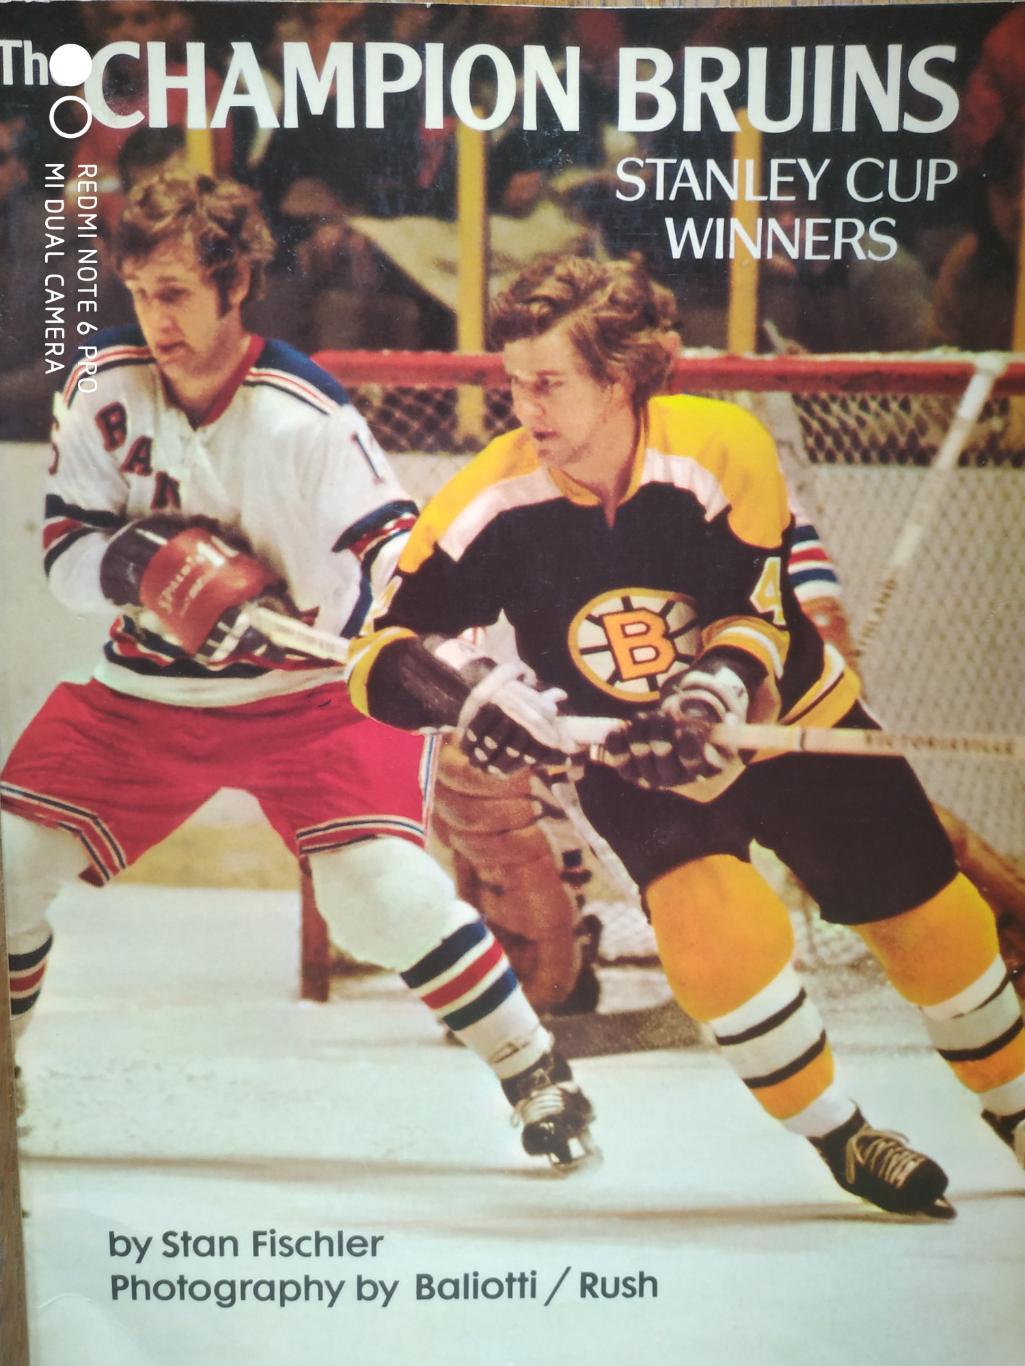 ПРОГРАММА НХЛ NHL 1972 THE CHAMPION BRUINS STANLEY CUP WINNERS by STAN FISCHLER